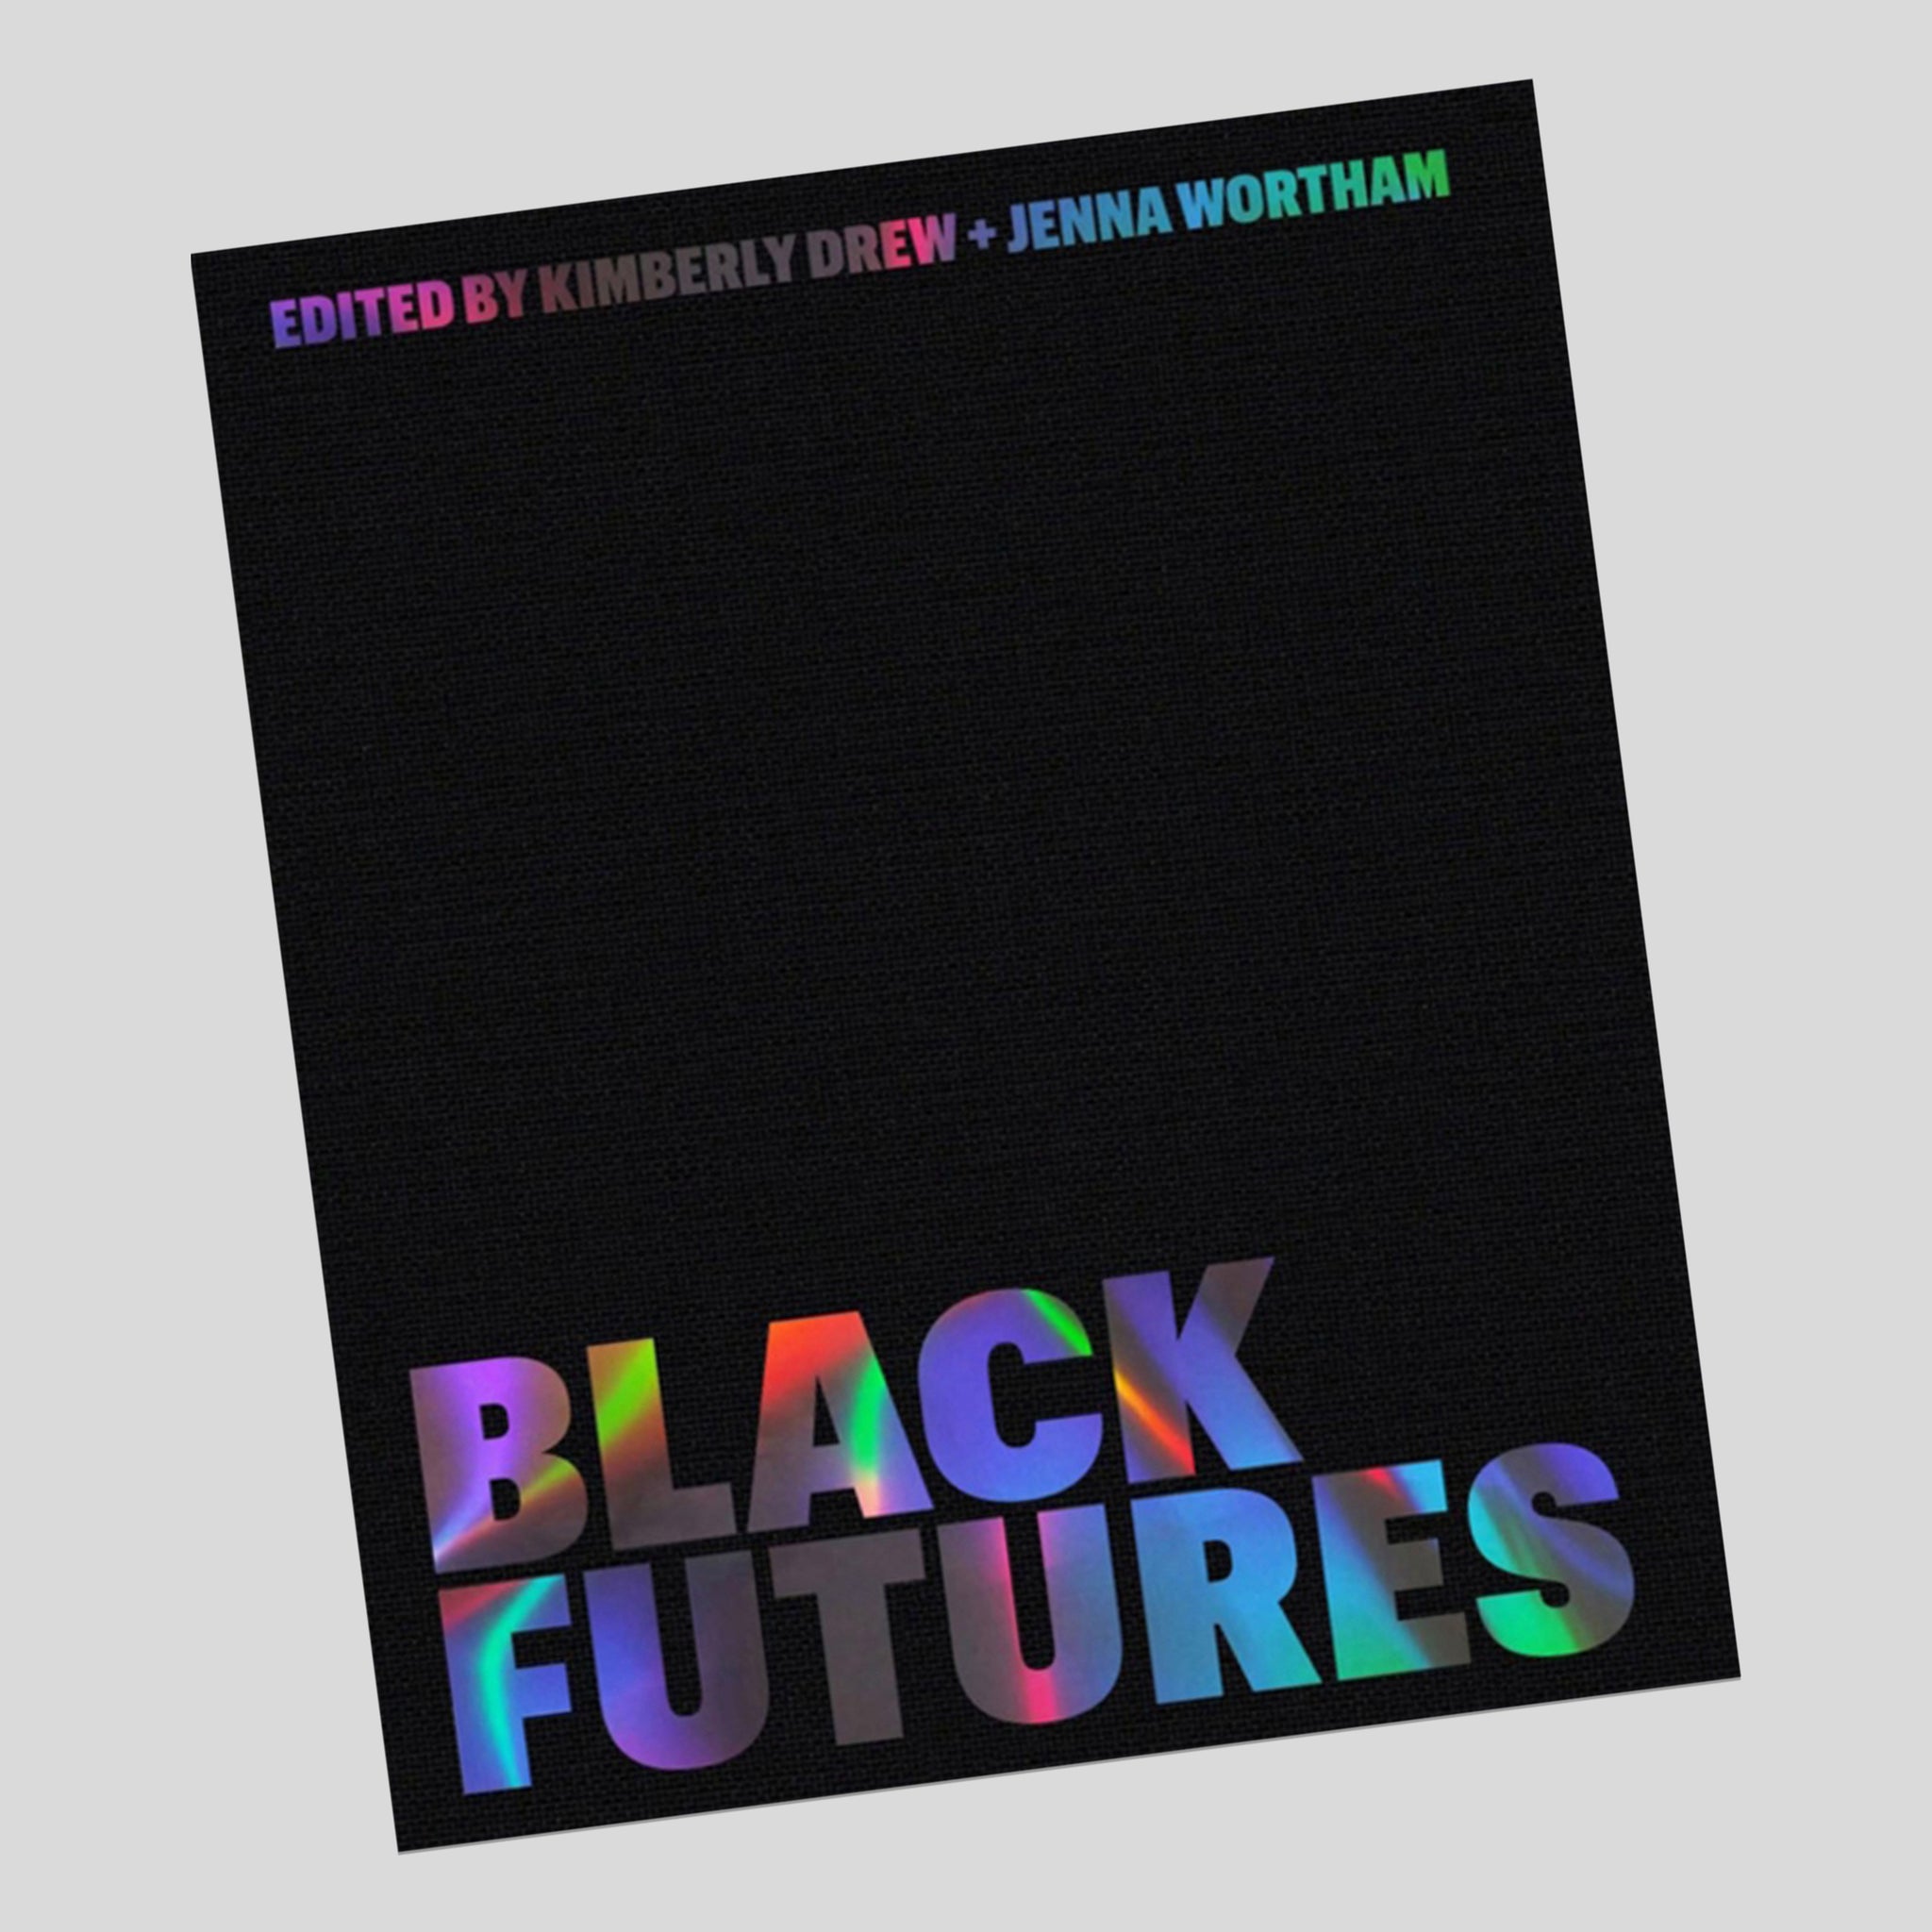 Black Futures - Kimberly Drew + Jenna Wortham